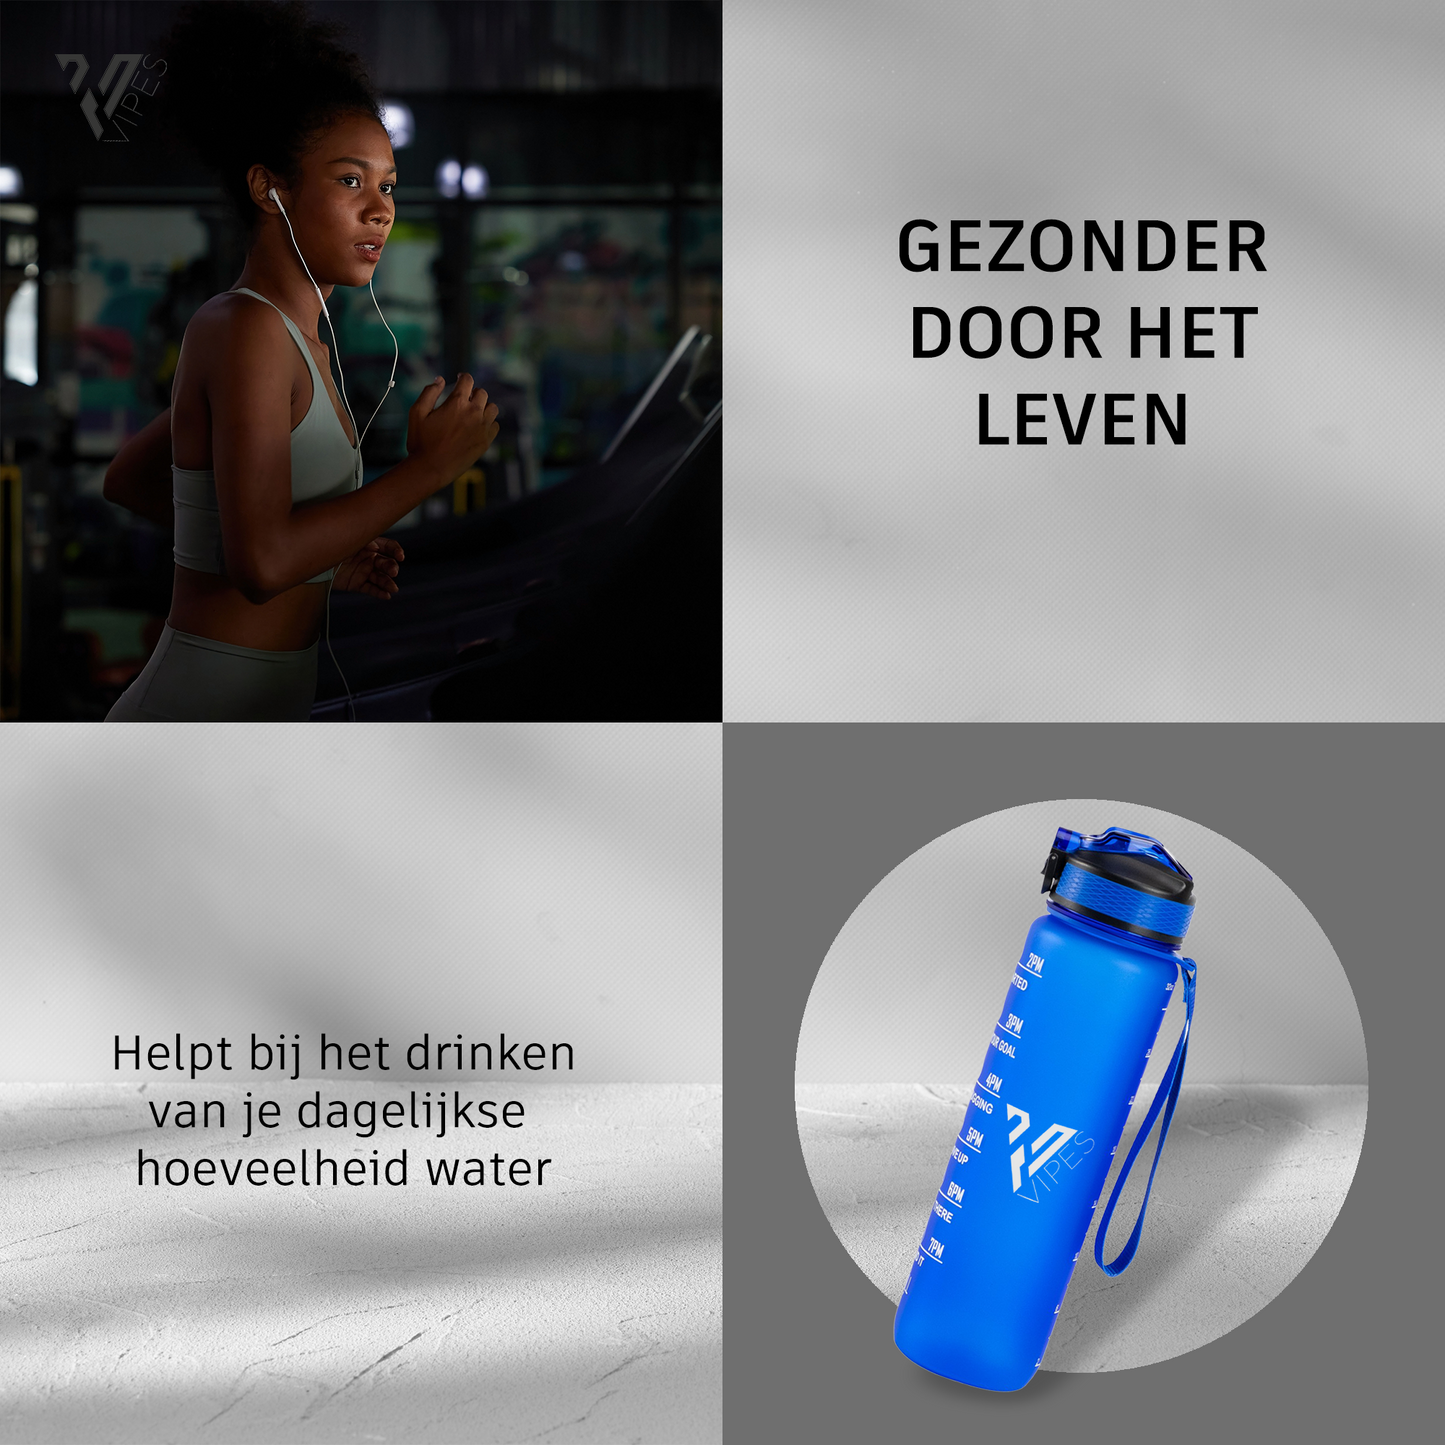 Motivation water bottle blue